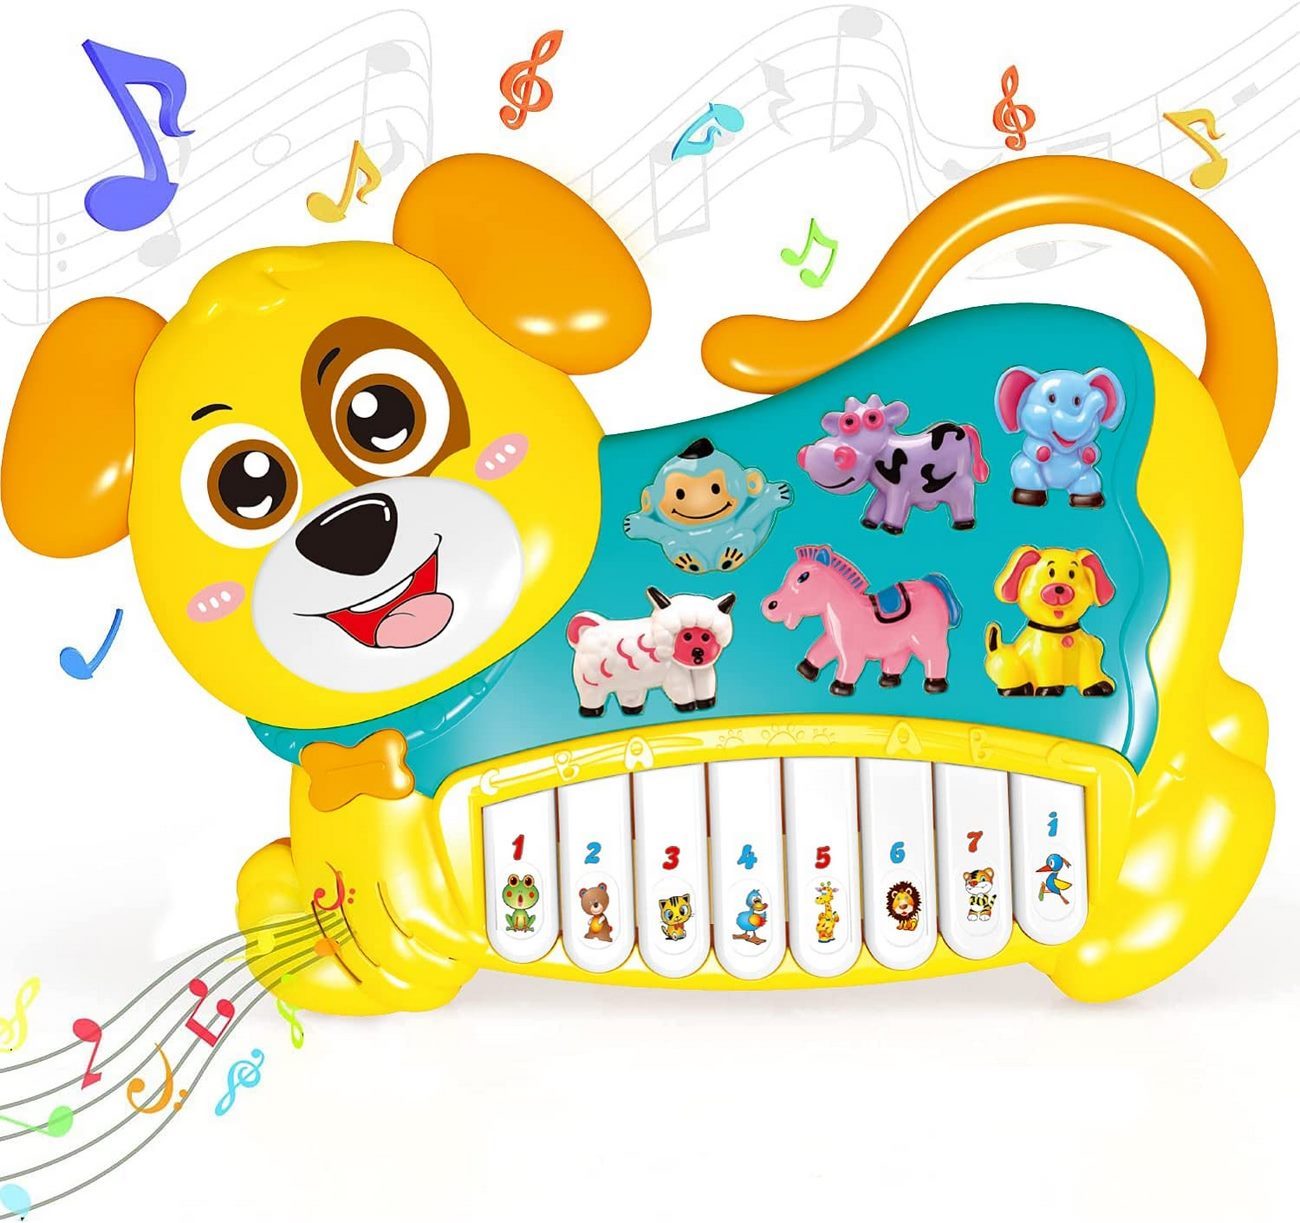 Piano Organeta Musical Bebes Niños + Baterias Juguete